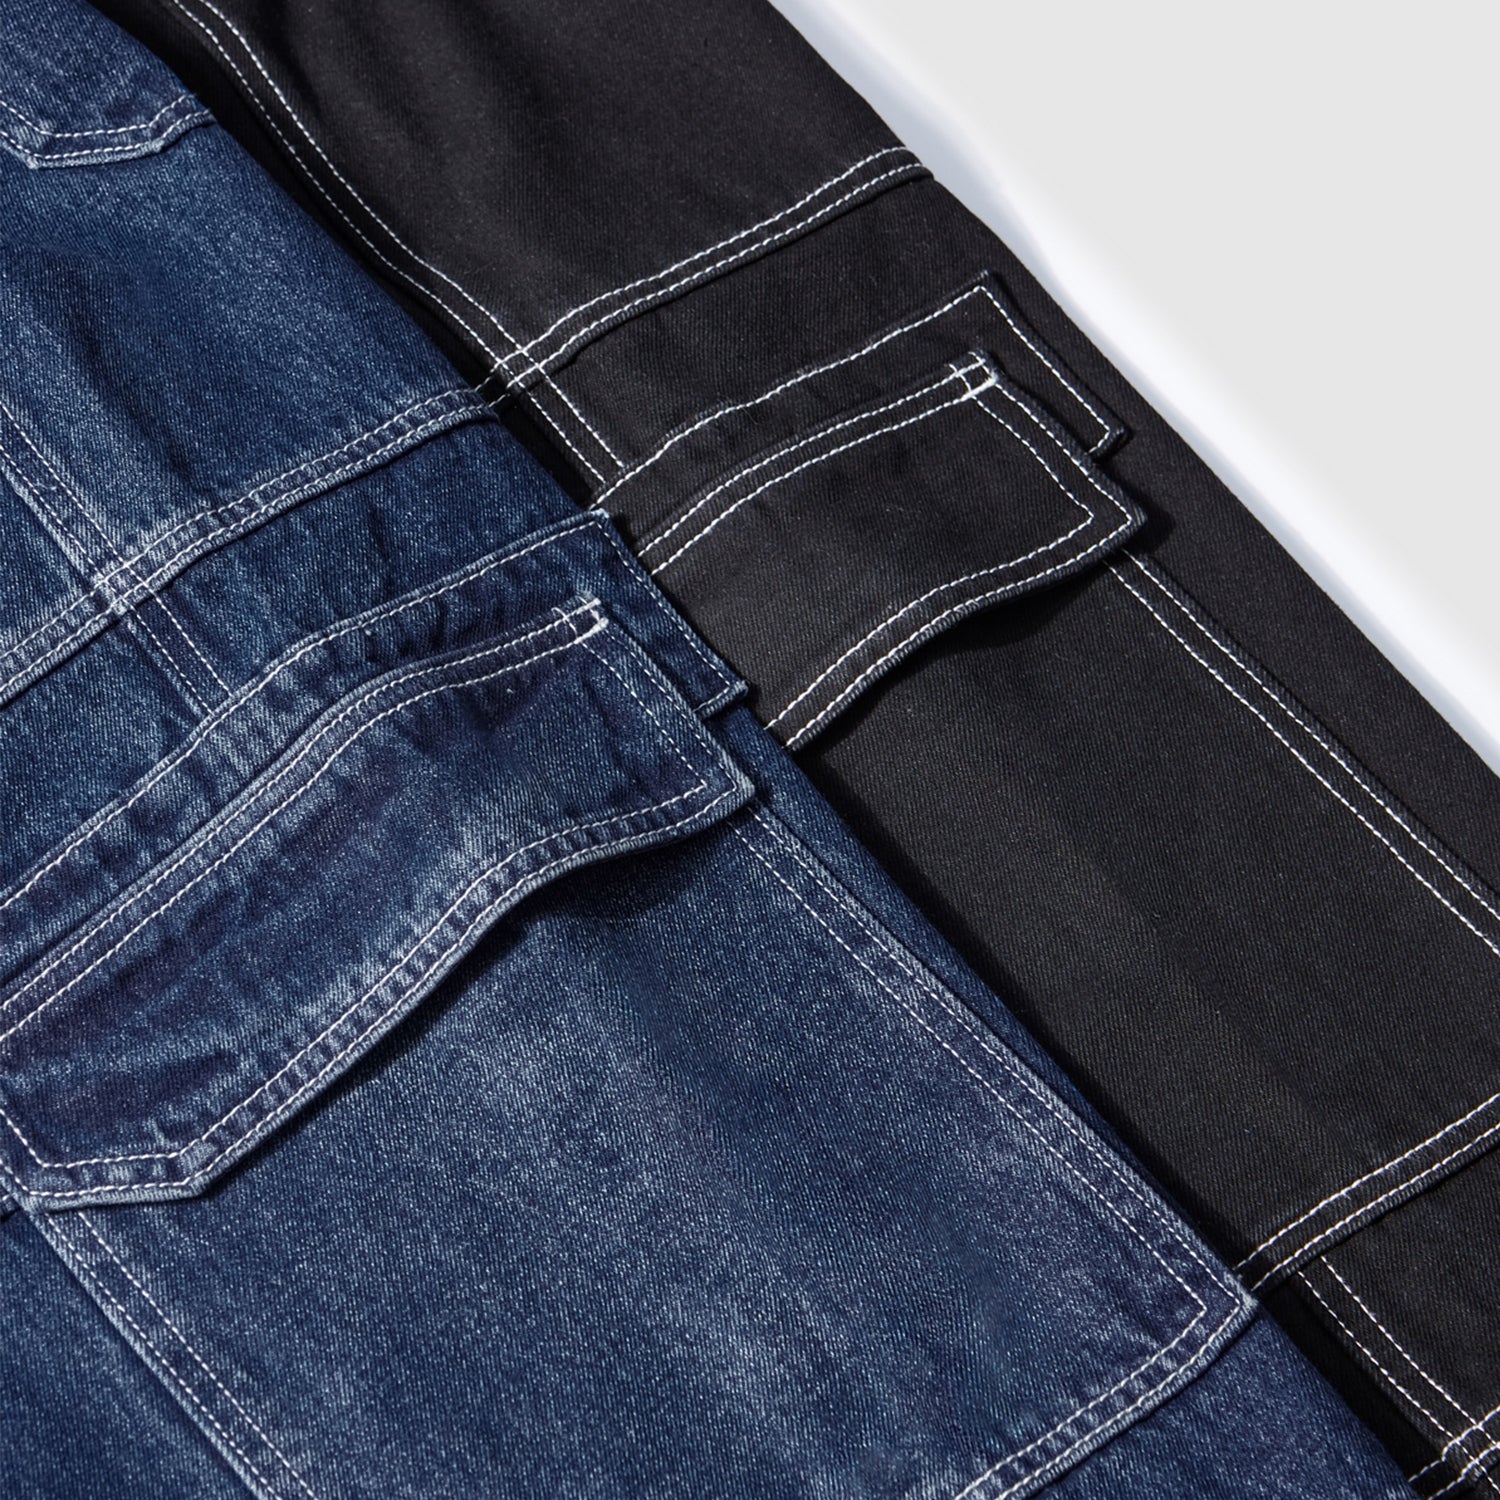 - Skull Flag Streetwear Men's Pockets Wide-Legged Straight Cut Denim Jeans (Blue) - mens jeans at TFC&H Co.